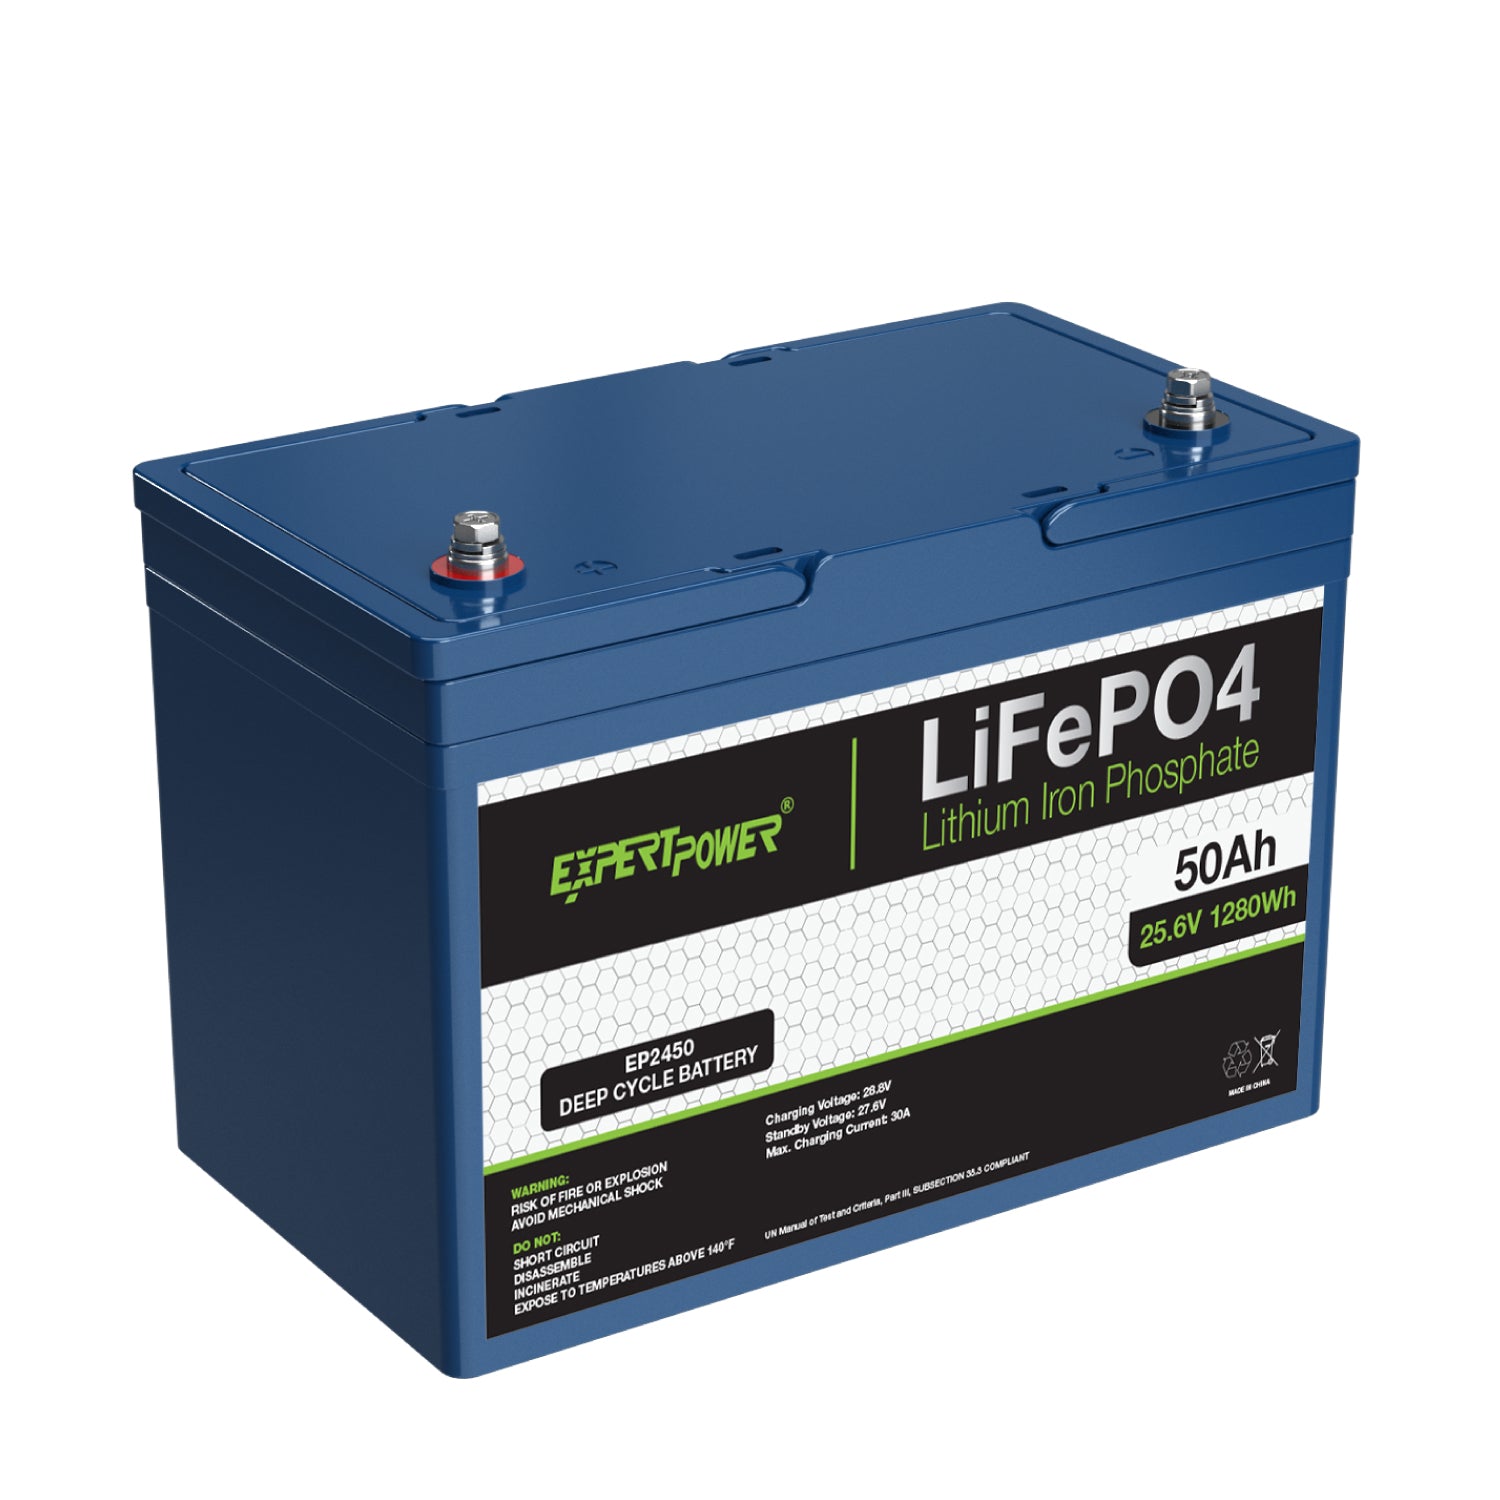 Lithium Ion battery 24V 50Ah - LiFePO4 - PowerBrick®